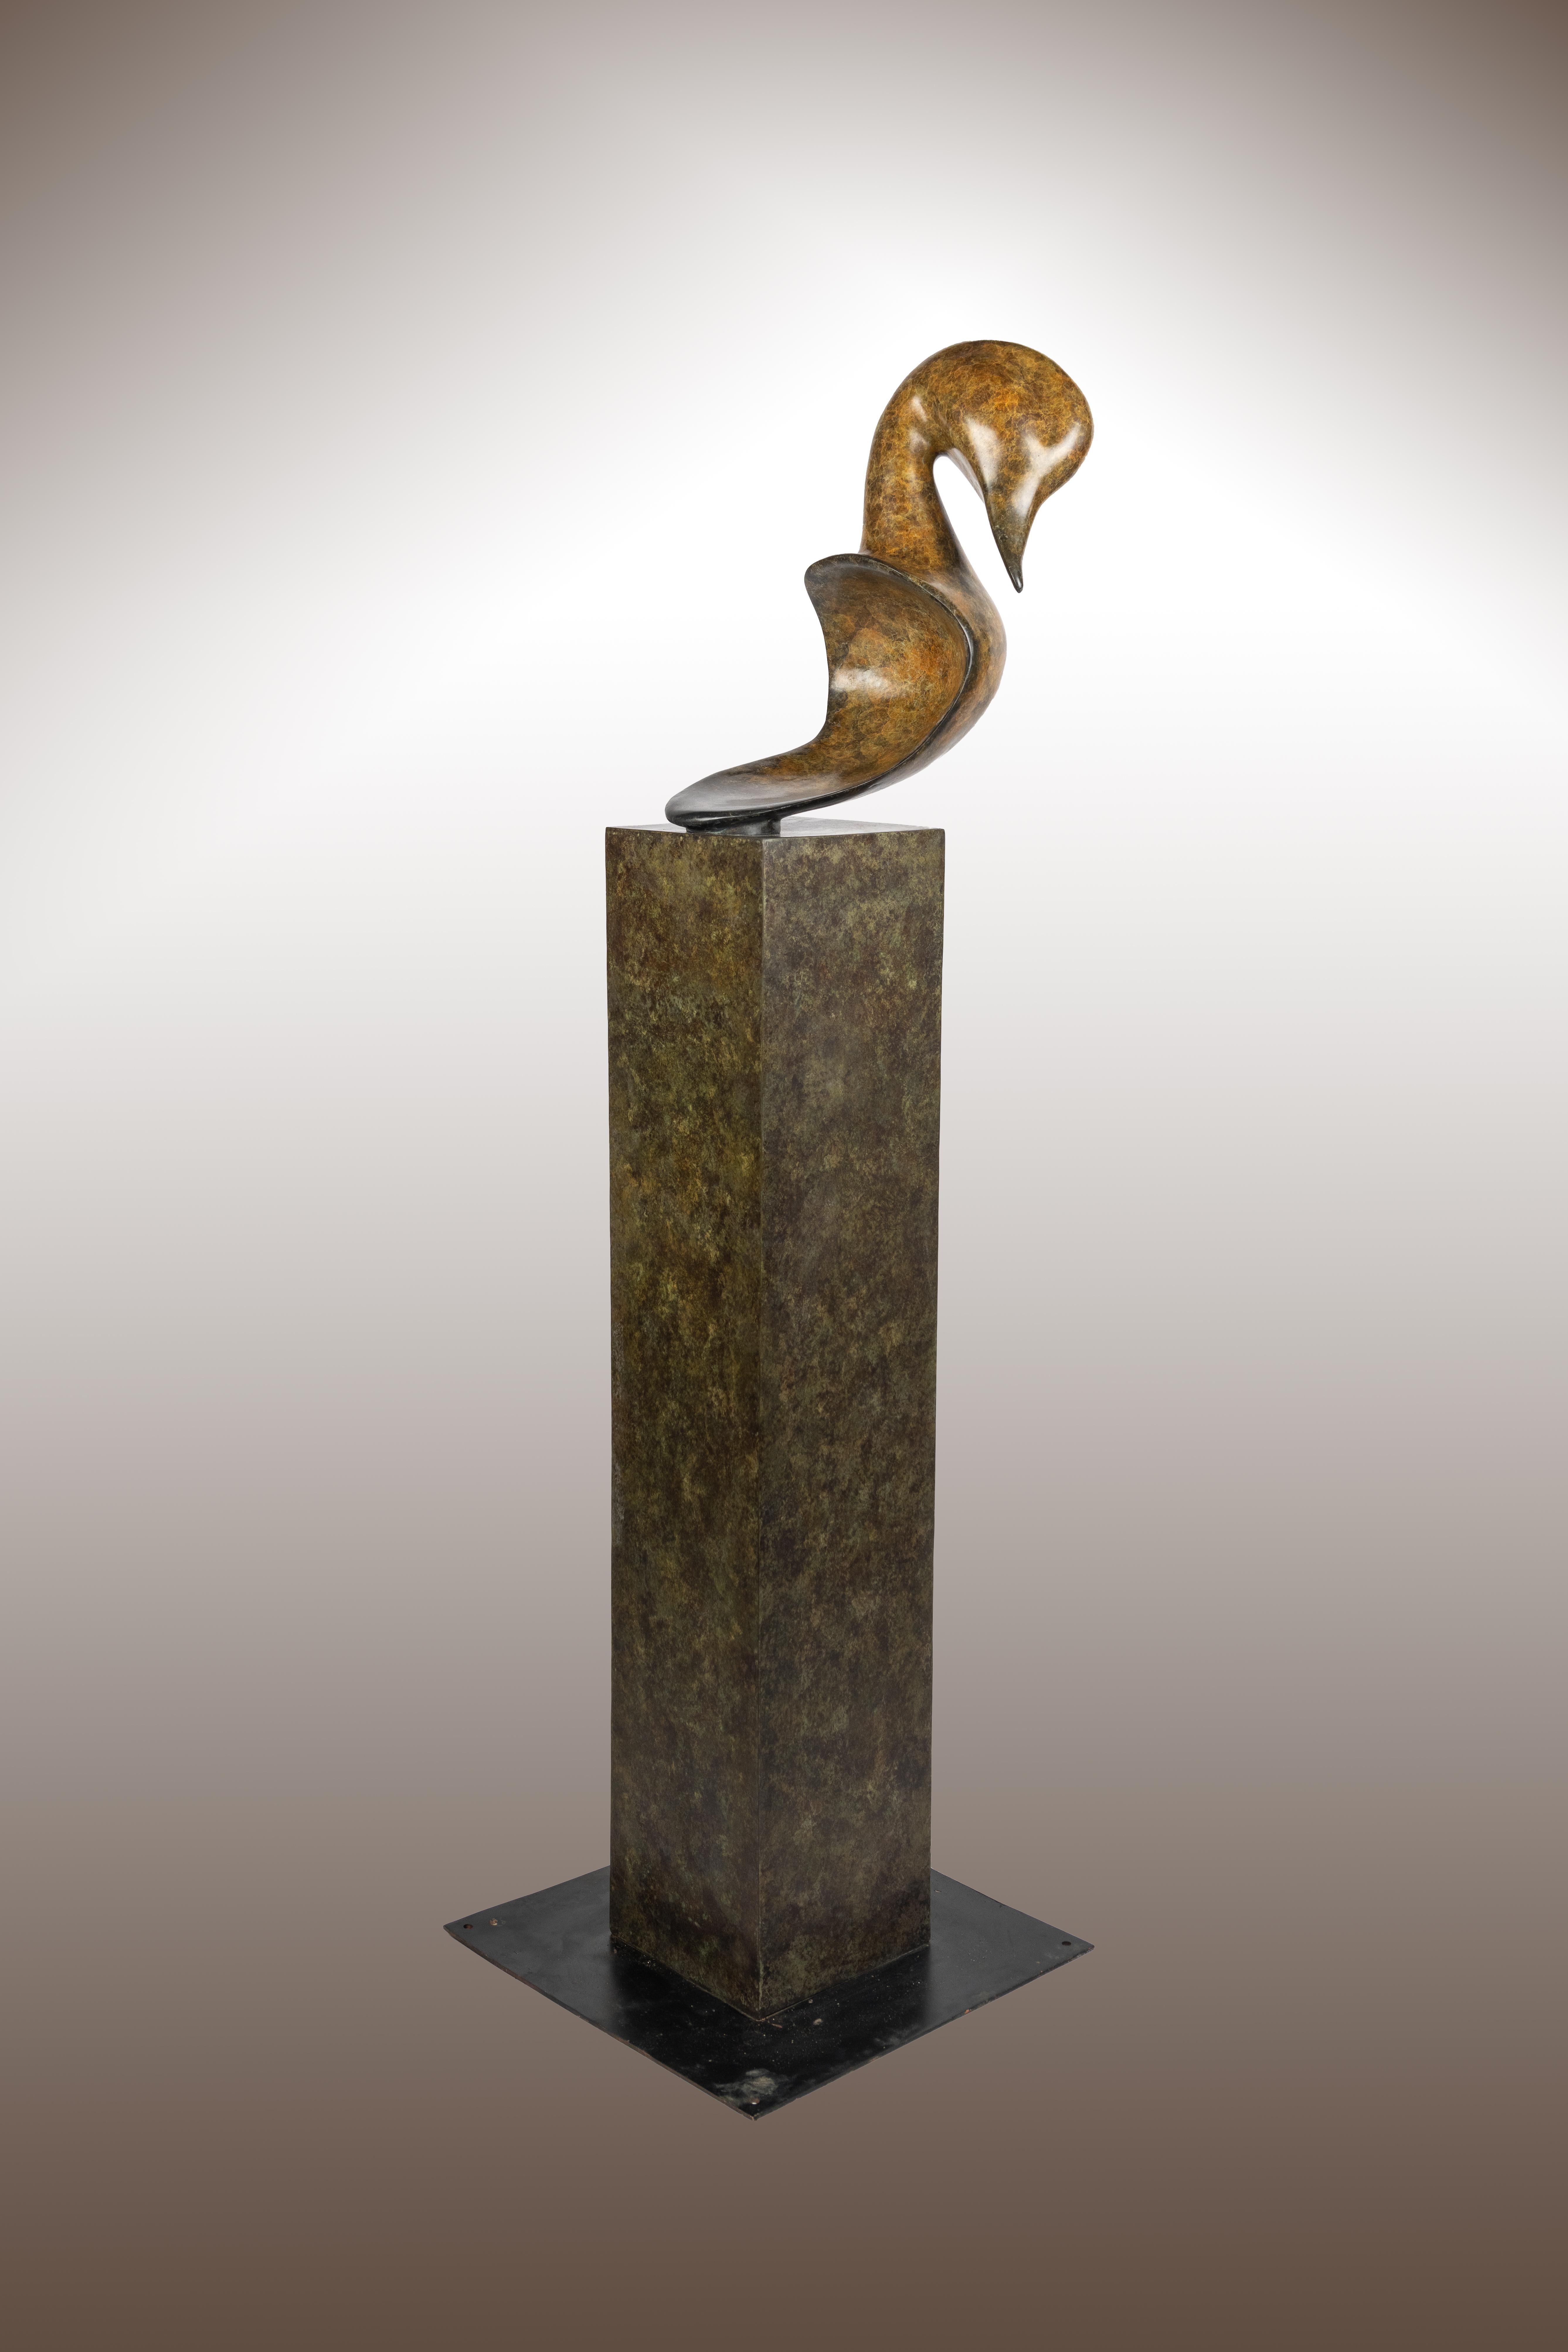 Grande sculpture contemporaine de faune en bronze « Tête de pique » de Richard Smith  - Sculpture de Richard Smith b.1955